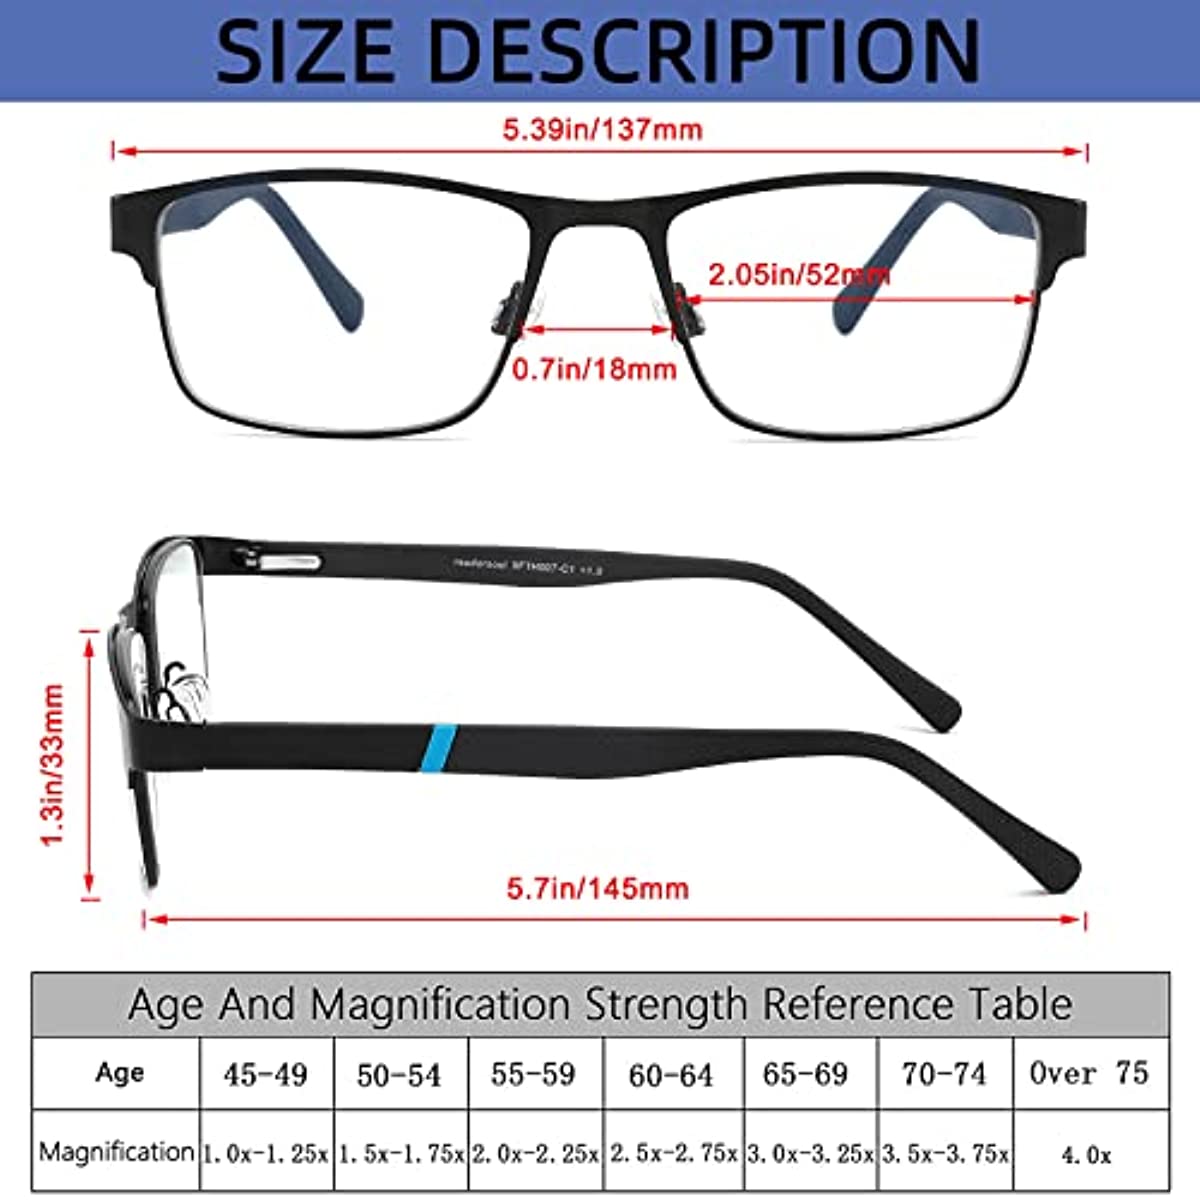 3-Pack Reading Glasses for Men Blue Light Blocking Trendy Metal Frame Computer Readers with Spring Hinges Anti Eye Strain/Glare Uv Ray Filter Eyeglasses(+1.5 Magnification Strength)